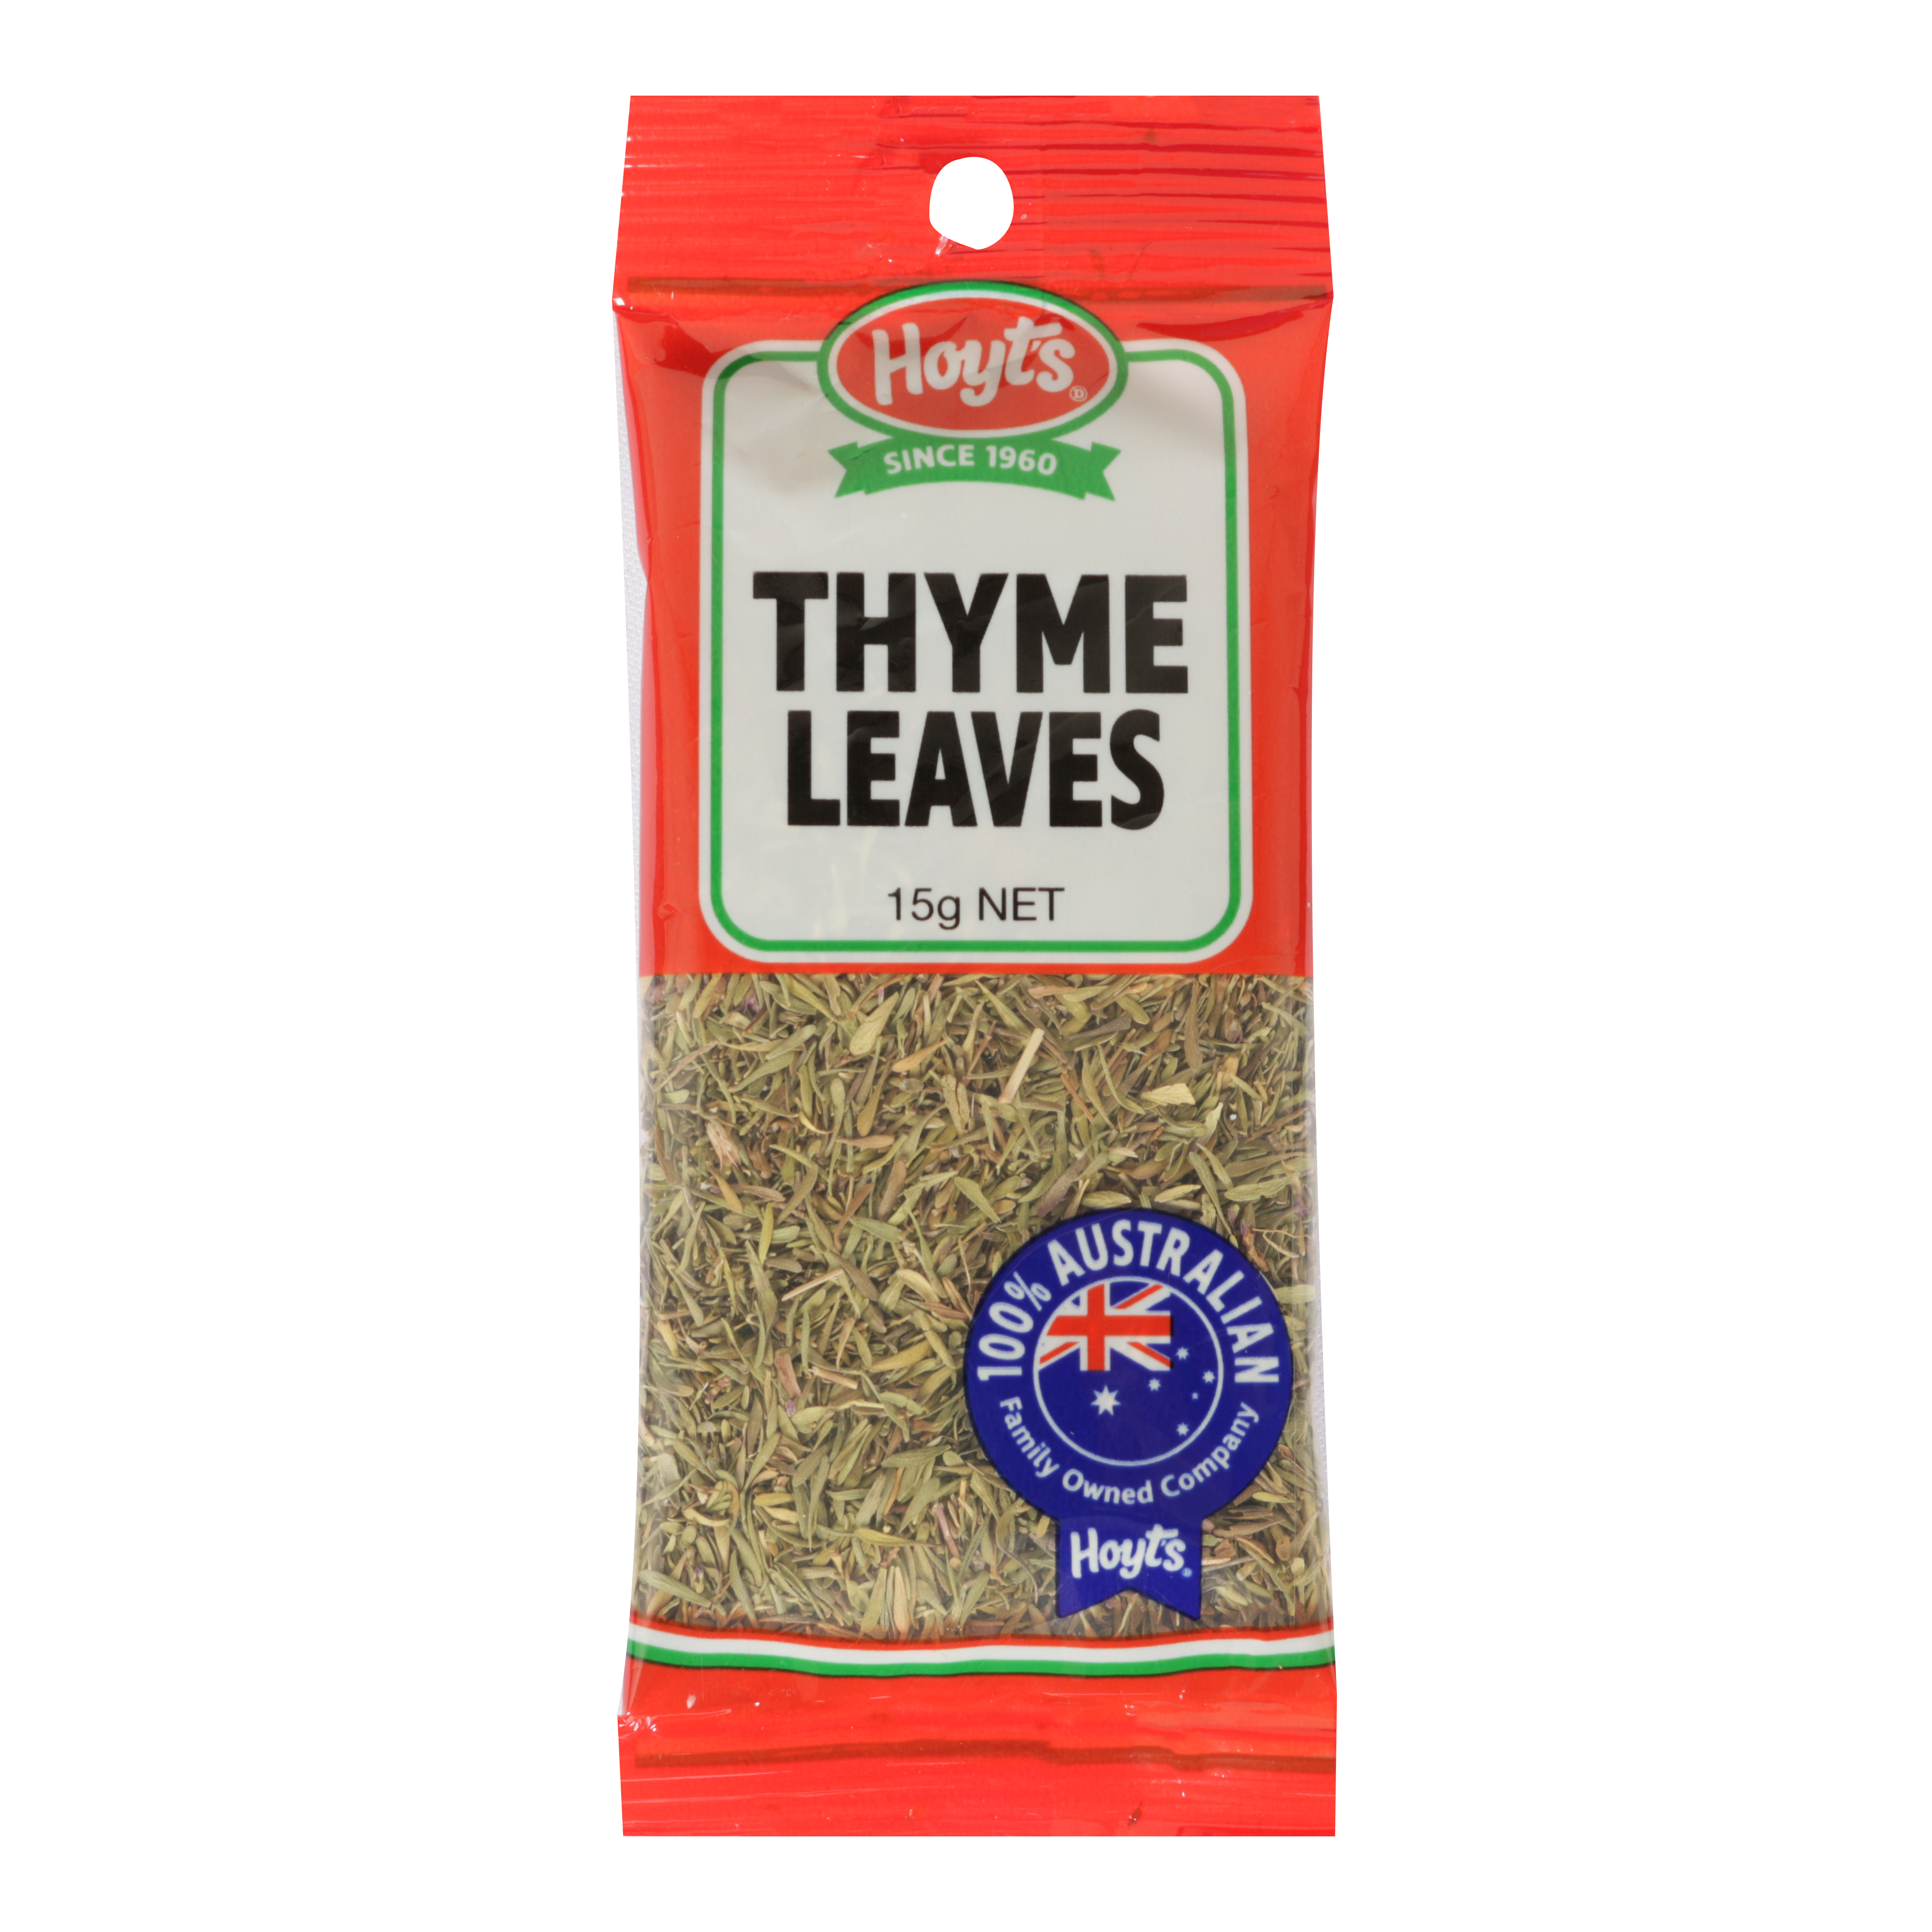 Hoyts Thyme Leaves 15g